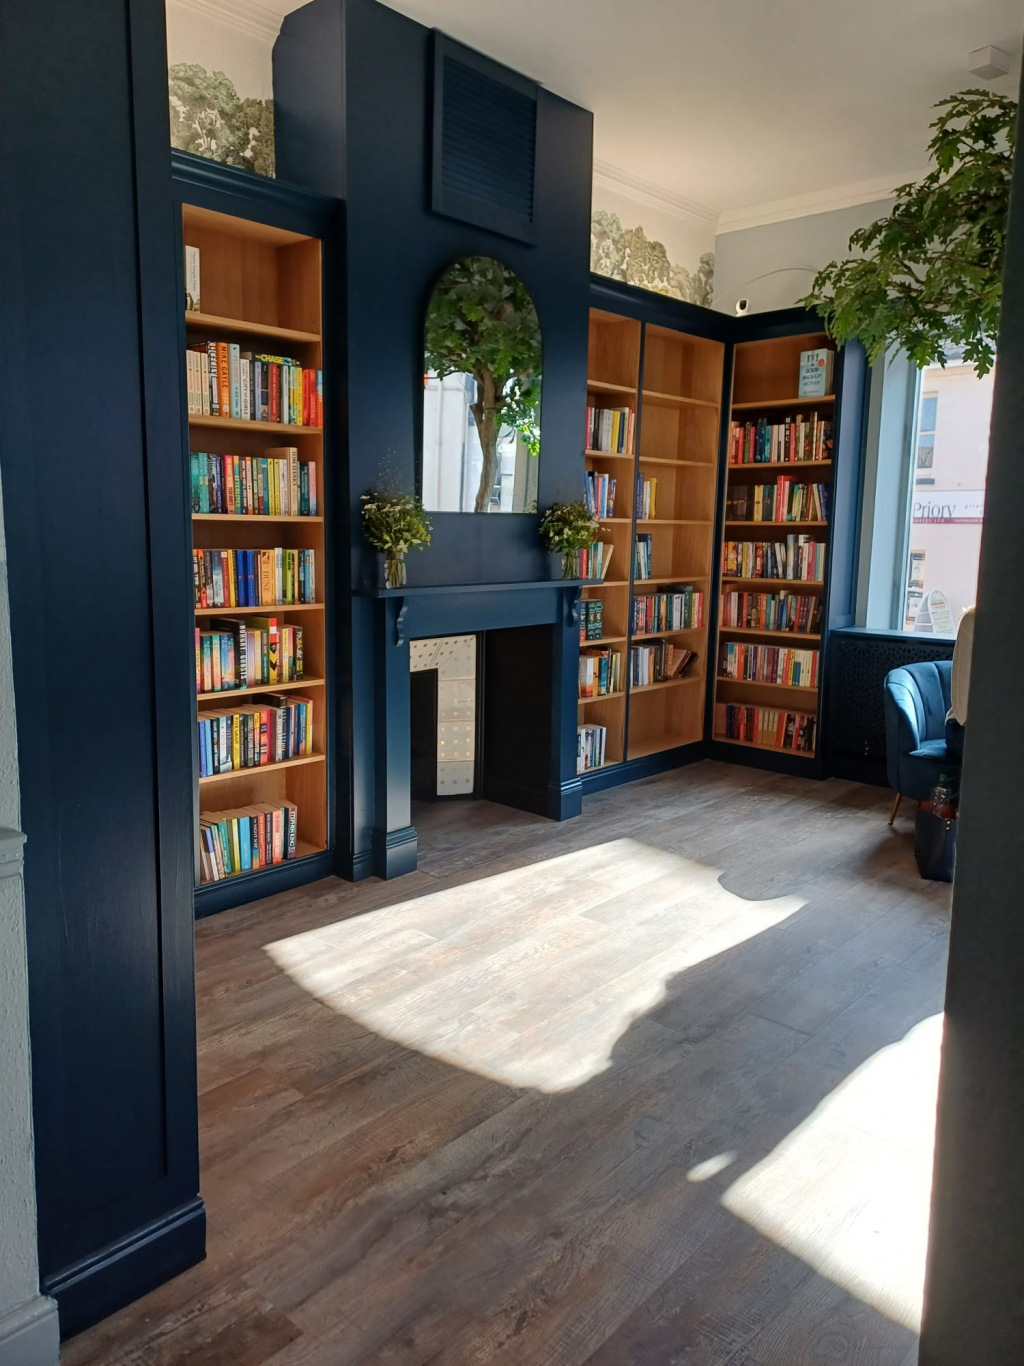 The interior of new Kett's Books